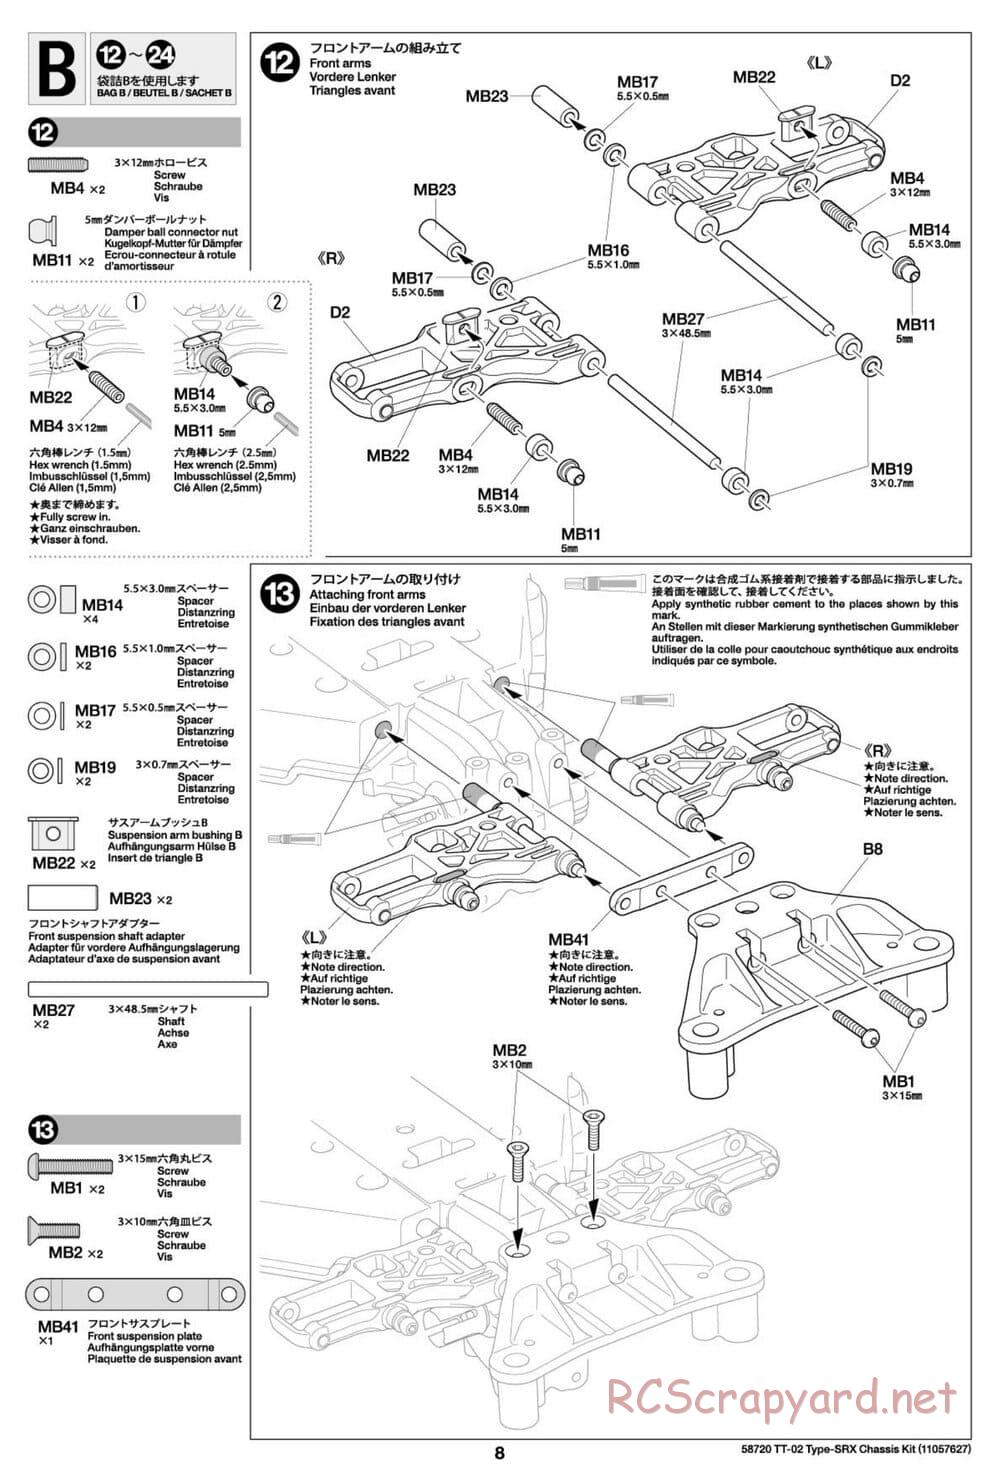 Tamiya - TT-02 Type-SRX Chassis - Manual - Page 8